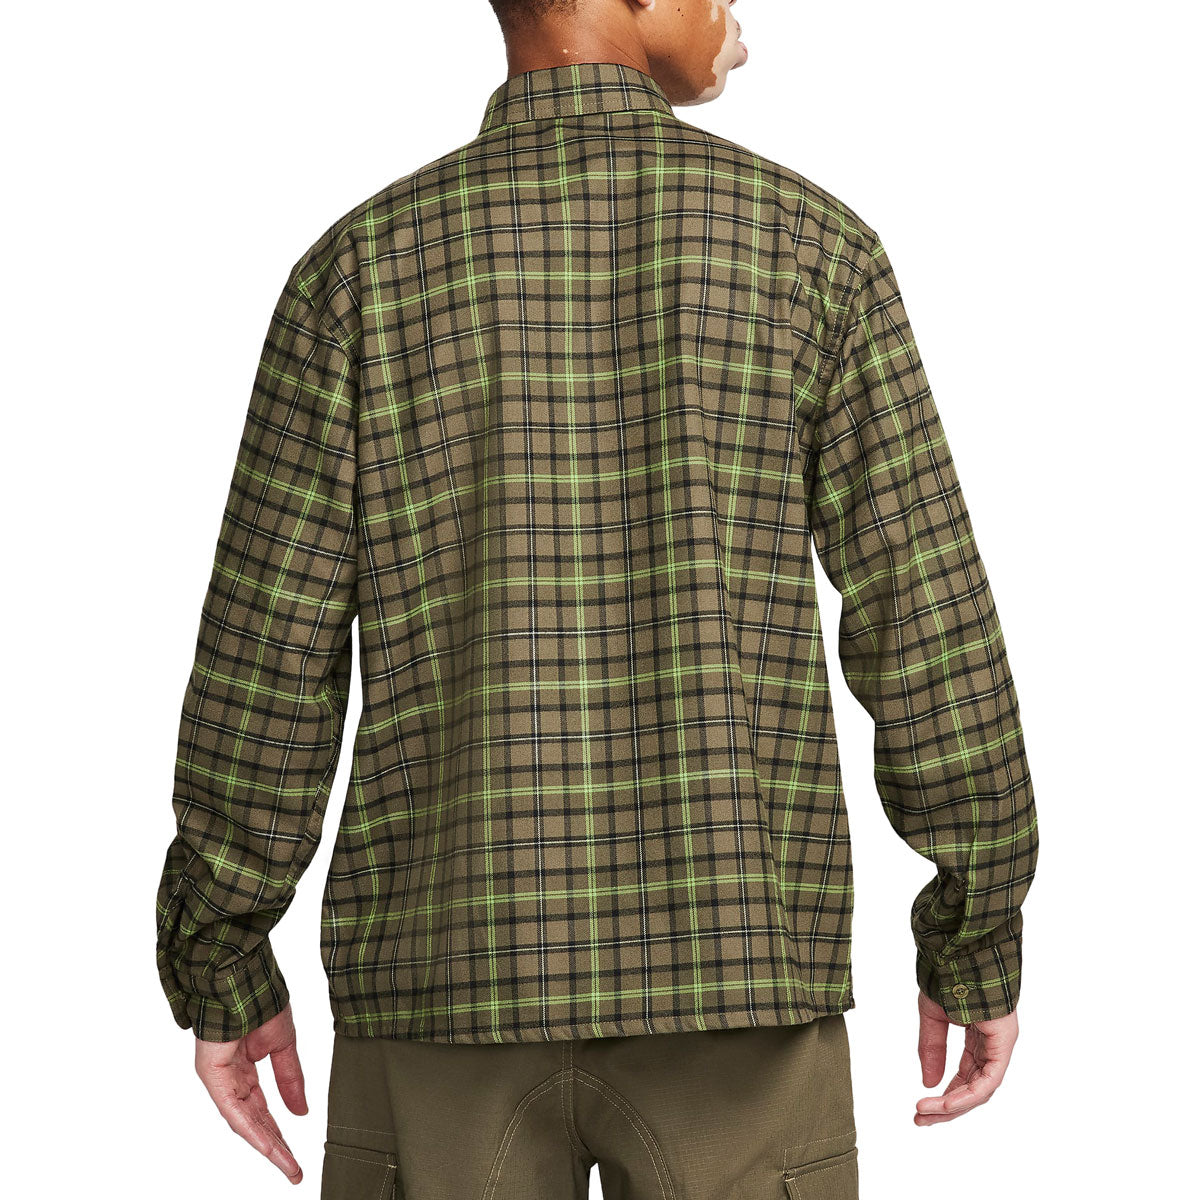 Nike SB Flannel Skate Button Up Shirt - Medium Olive/Cargo Khaki image 2